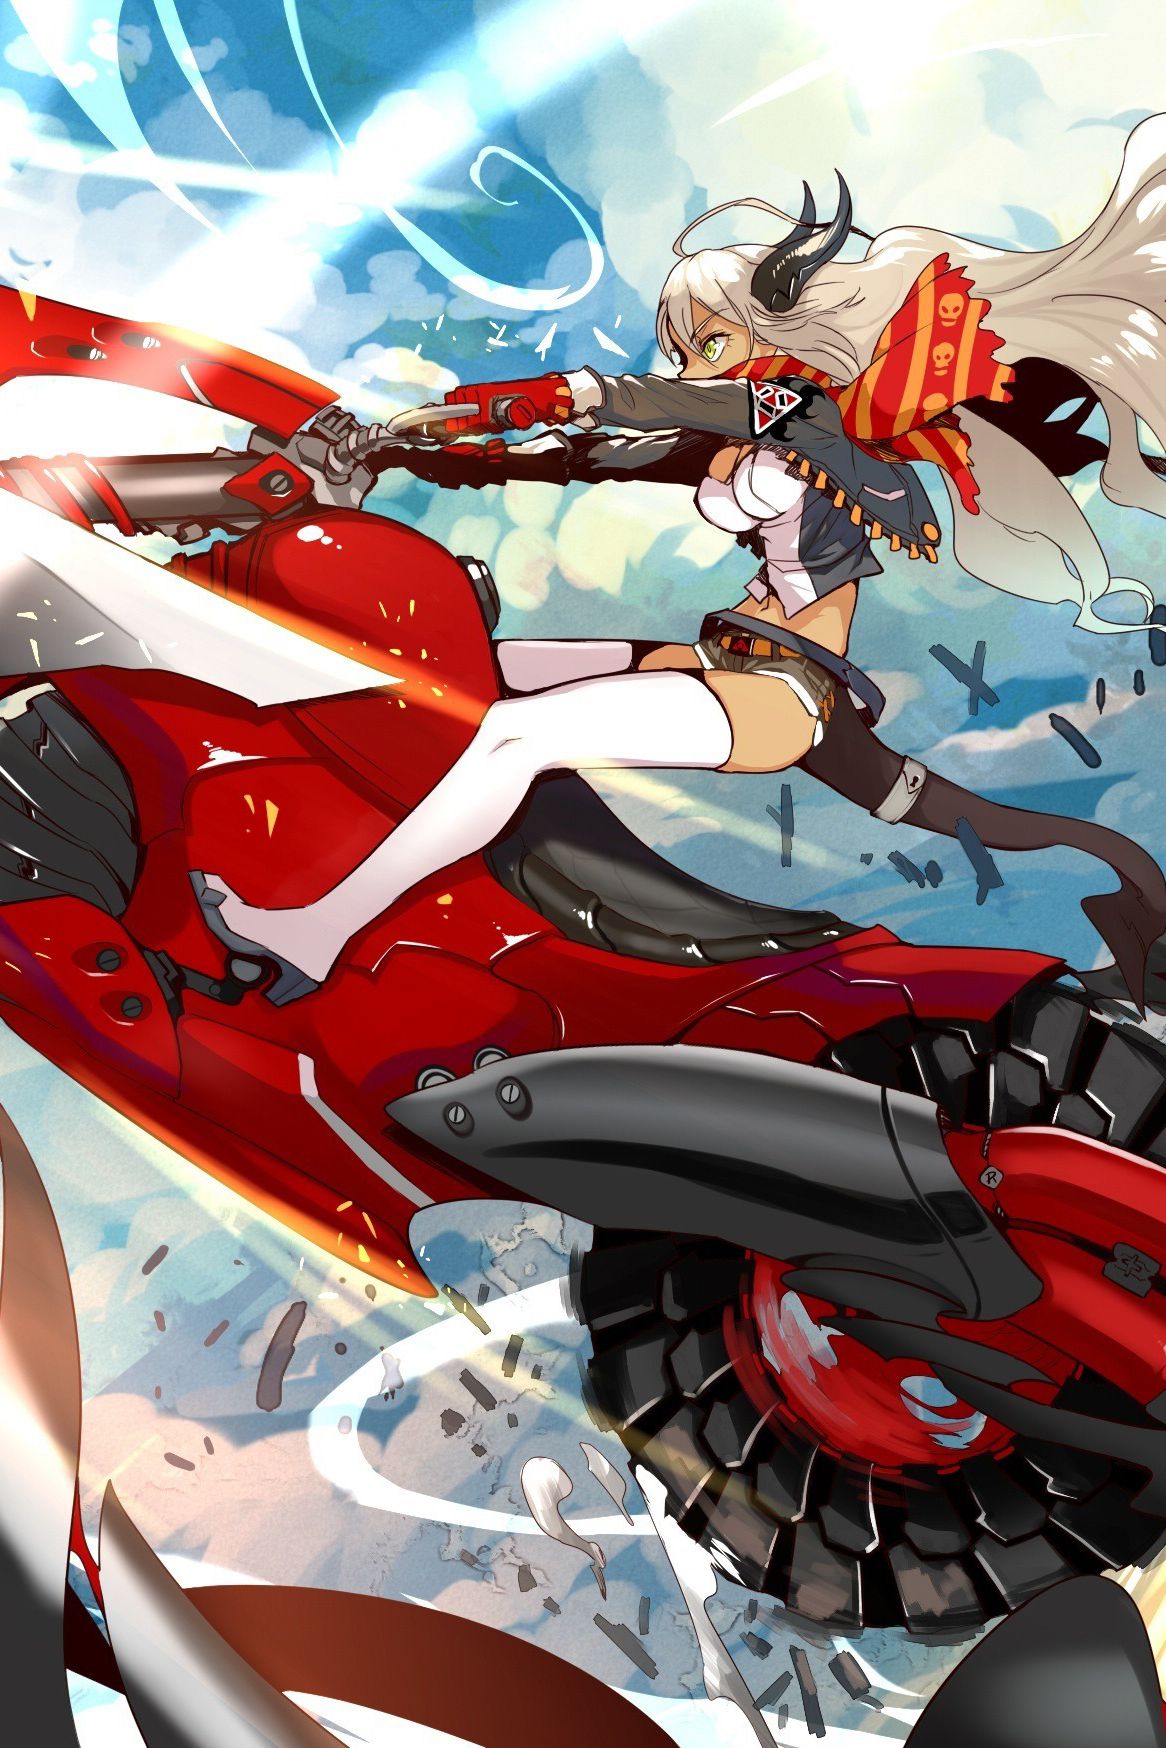 Bike hot anime girl ride original animation movie HD Wallpaper